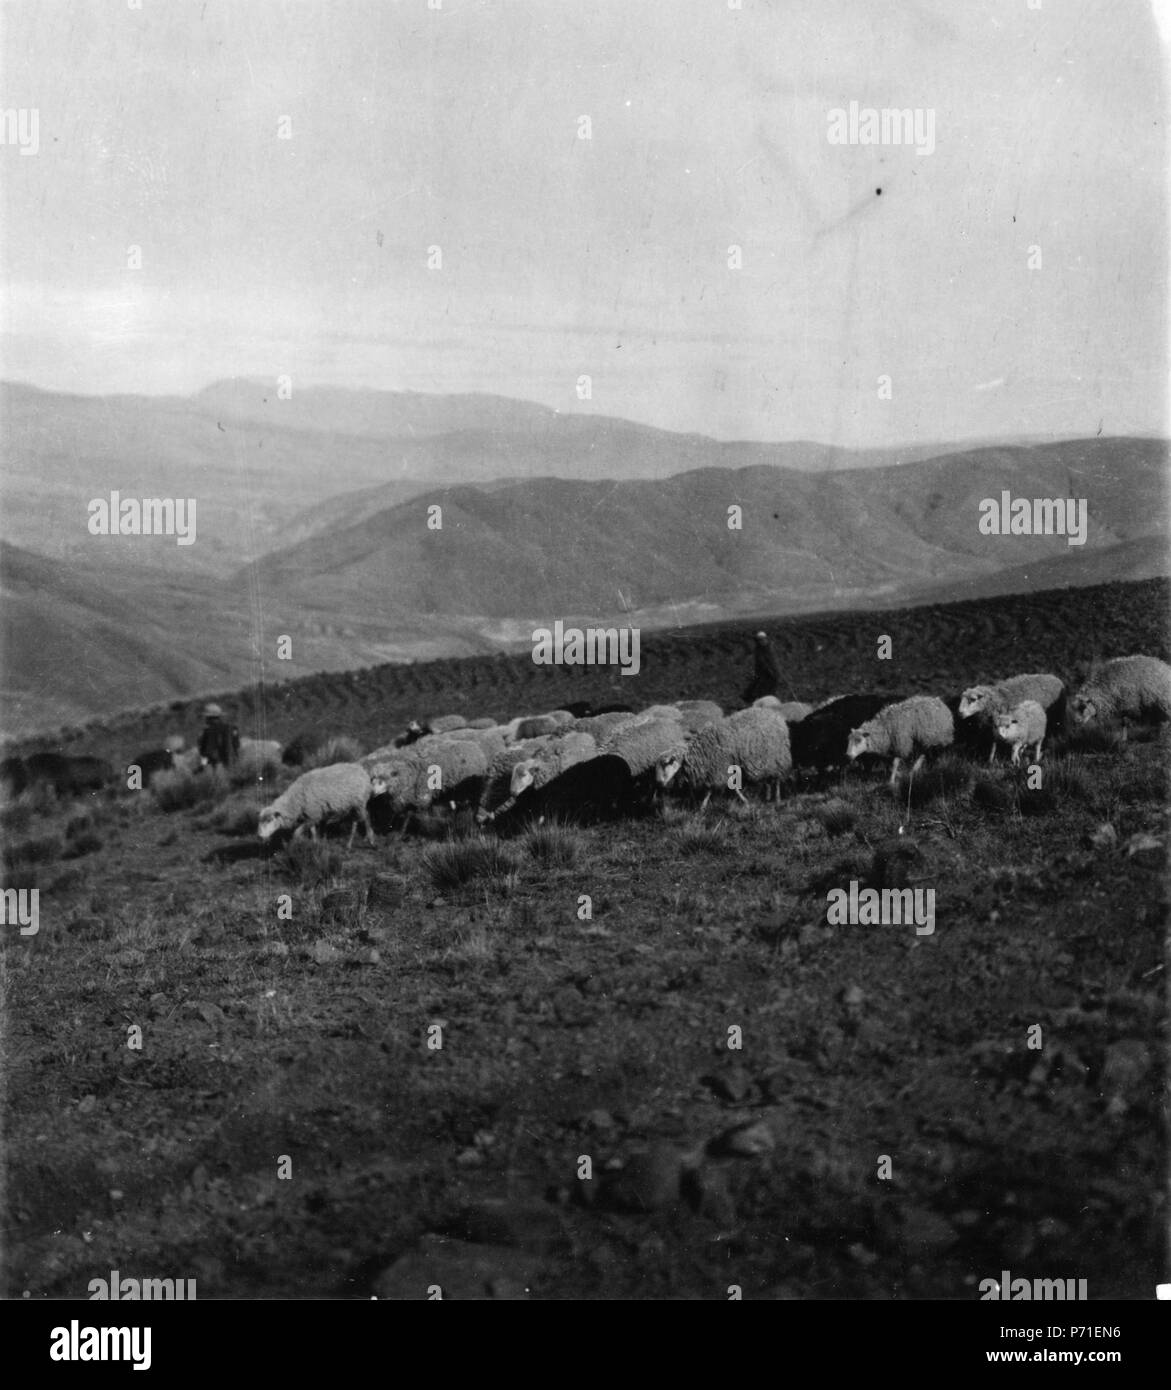 190 Quichuaindianskor valla Får. Sydamerika, Cuchicanchi, Cochabamba - Dalen, Bolivien - SMVK - 005769 Stockfoto